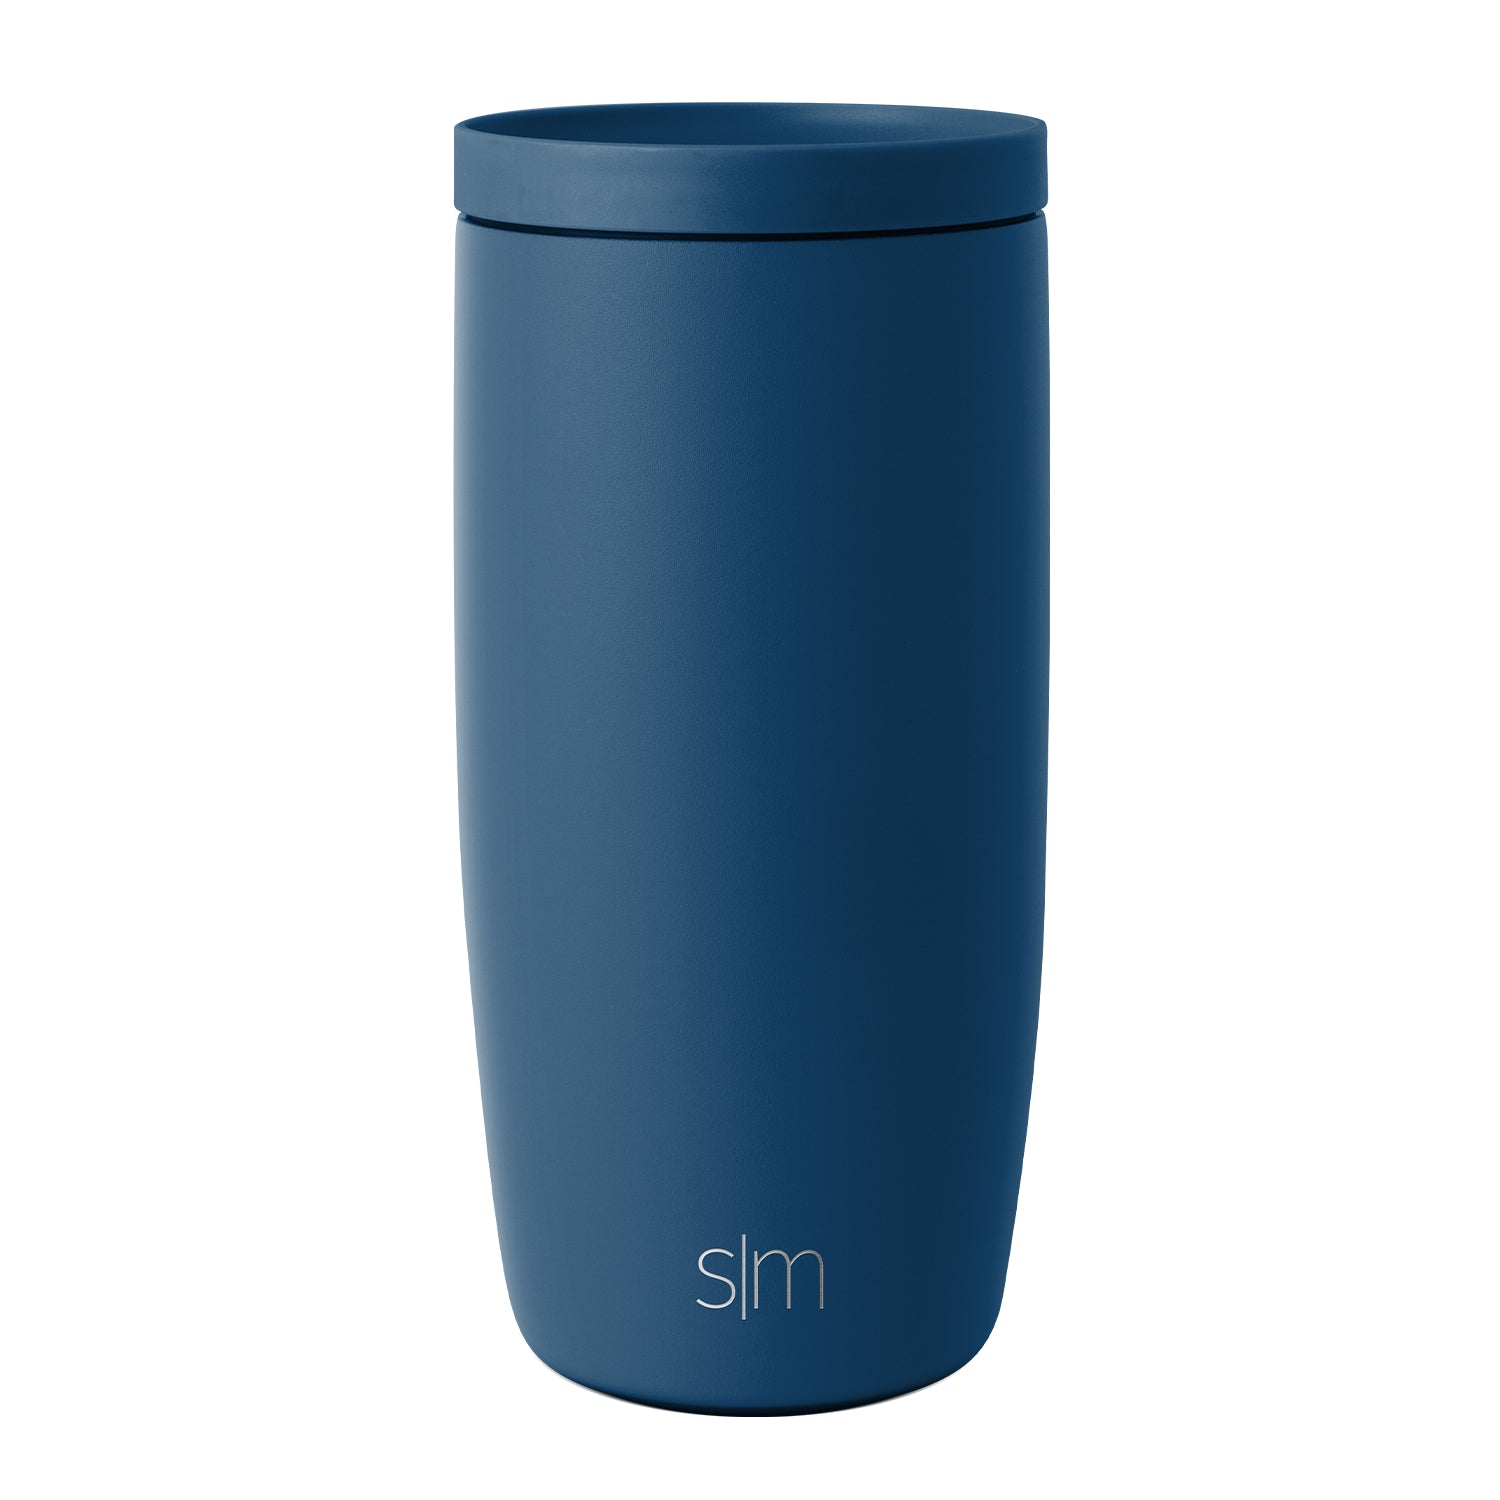 Simple Modern: New product alert! Meet the Voyager Mug